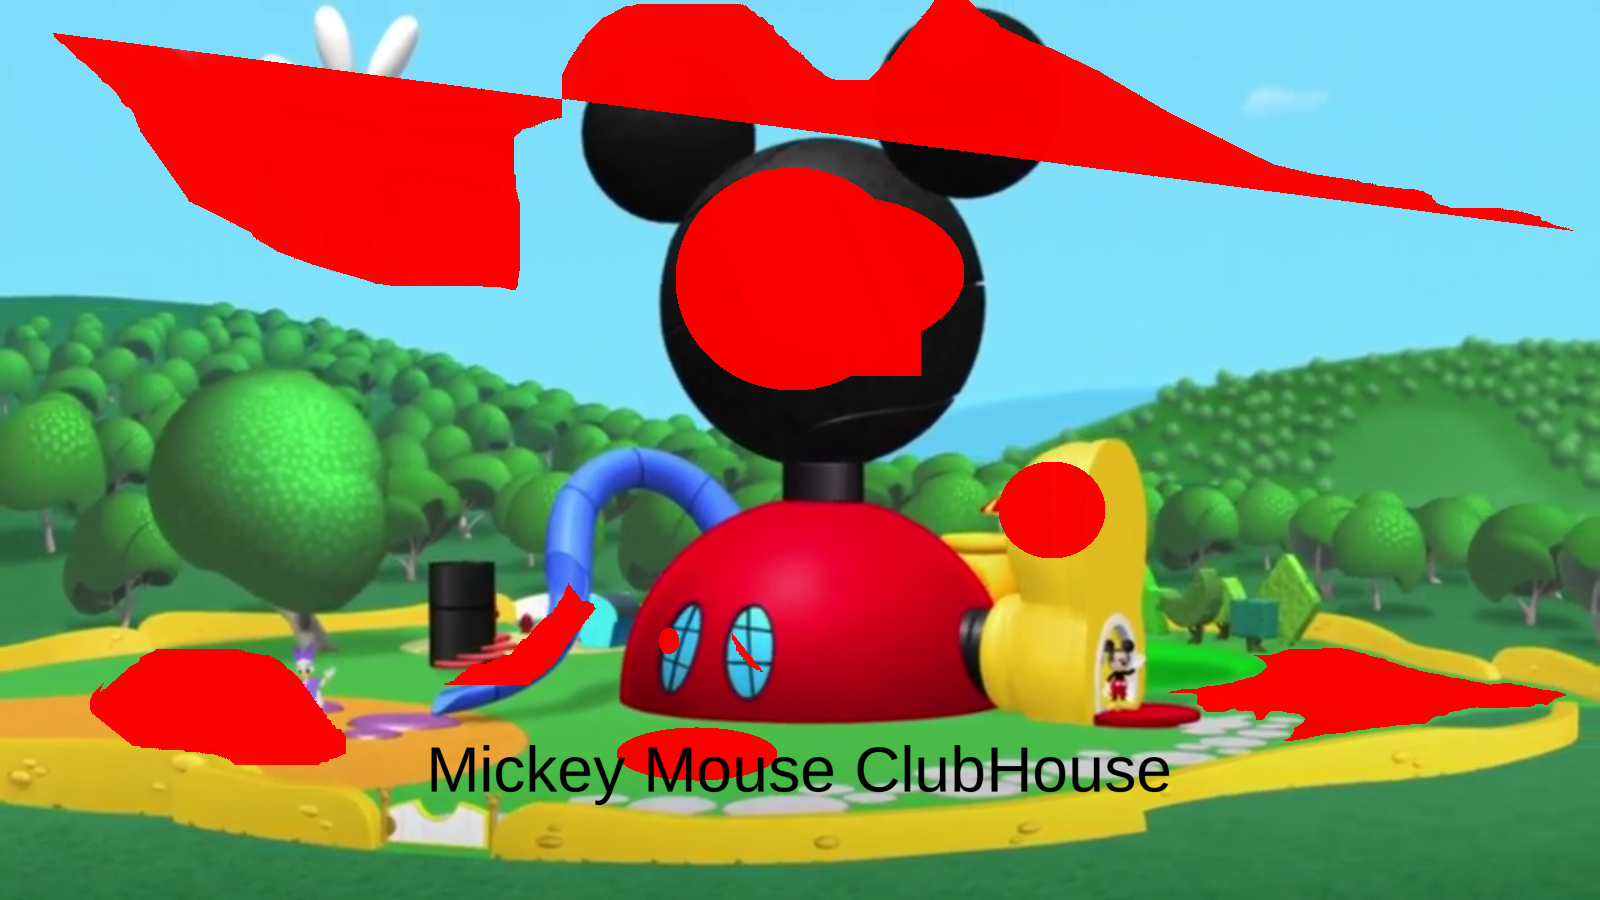 Mickey B - created by MinecraftBakingcake with paint